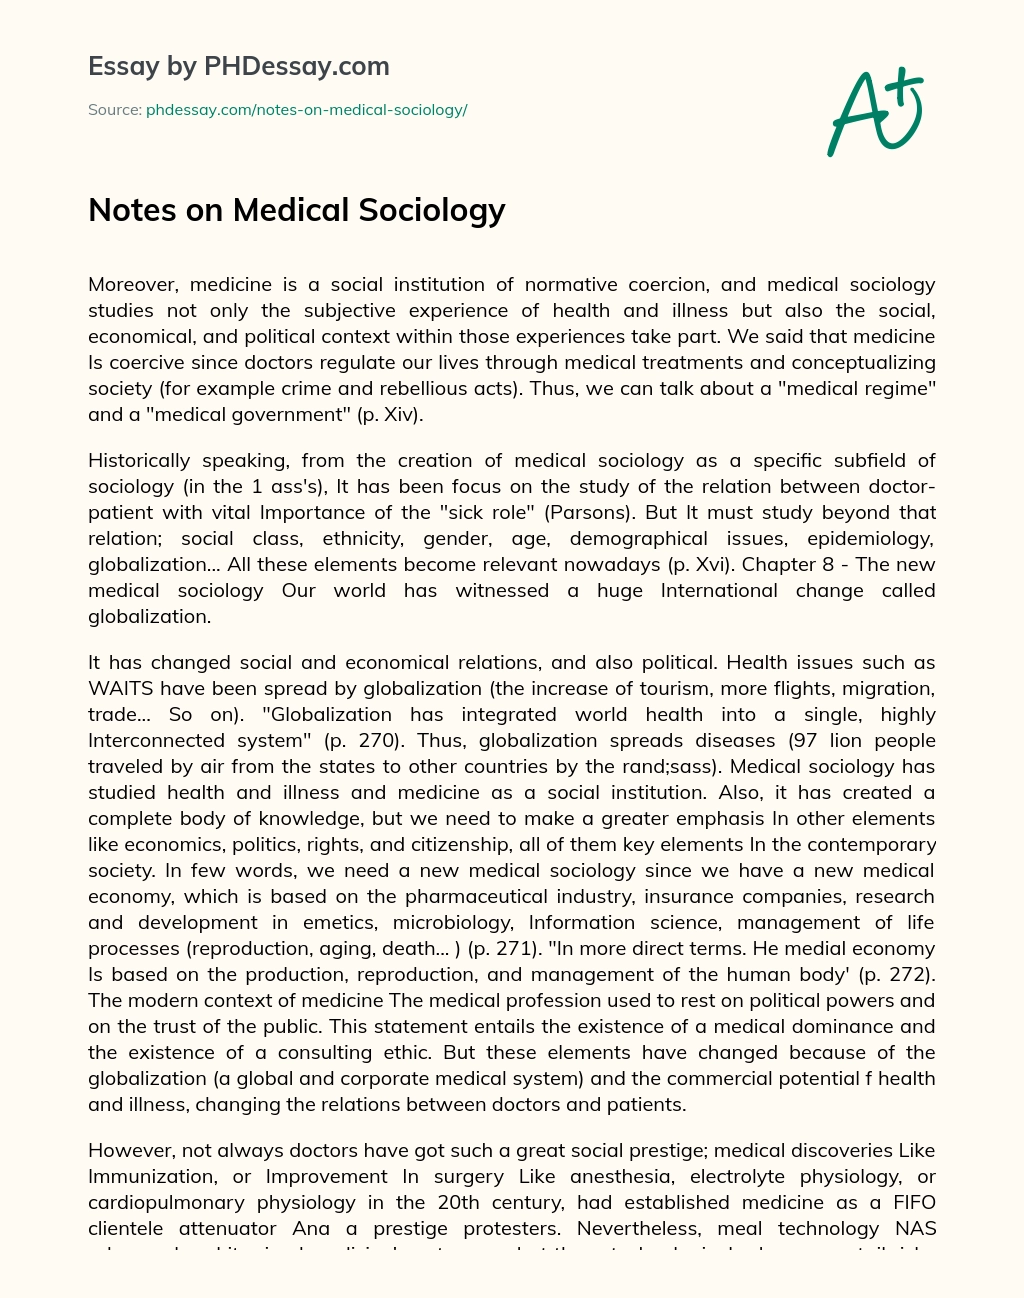 Notes on Medical Sociology essay